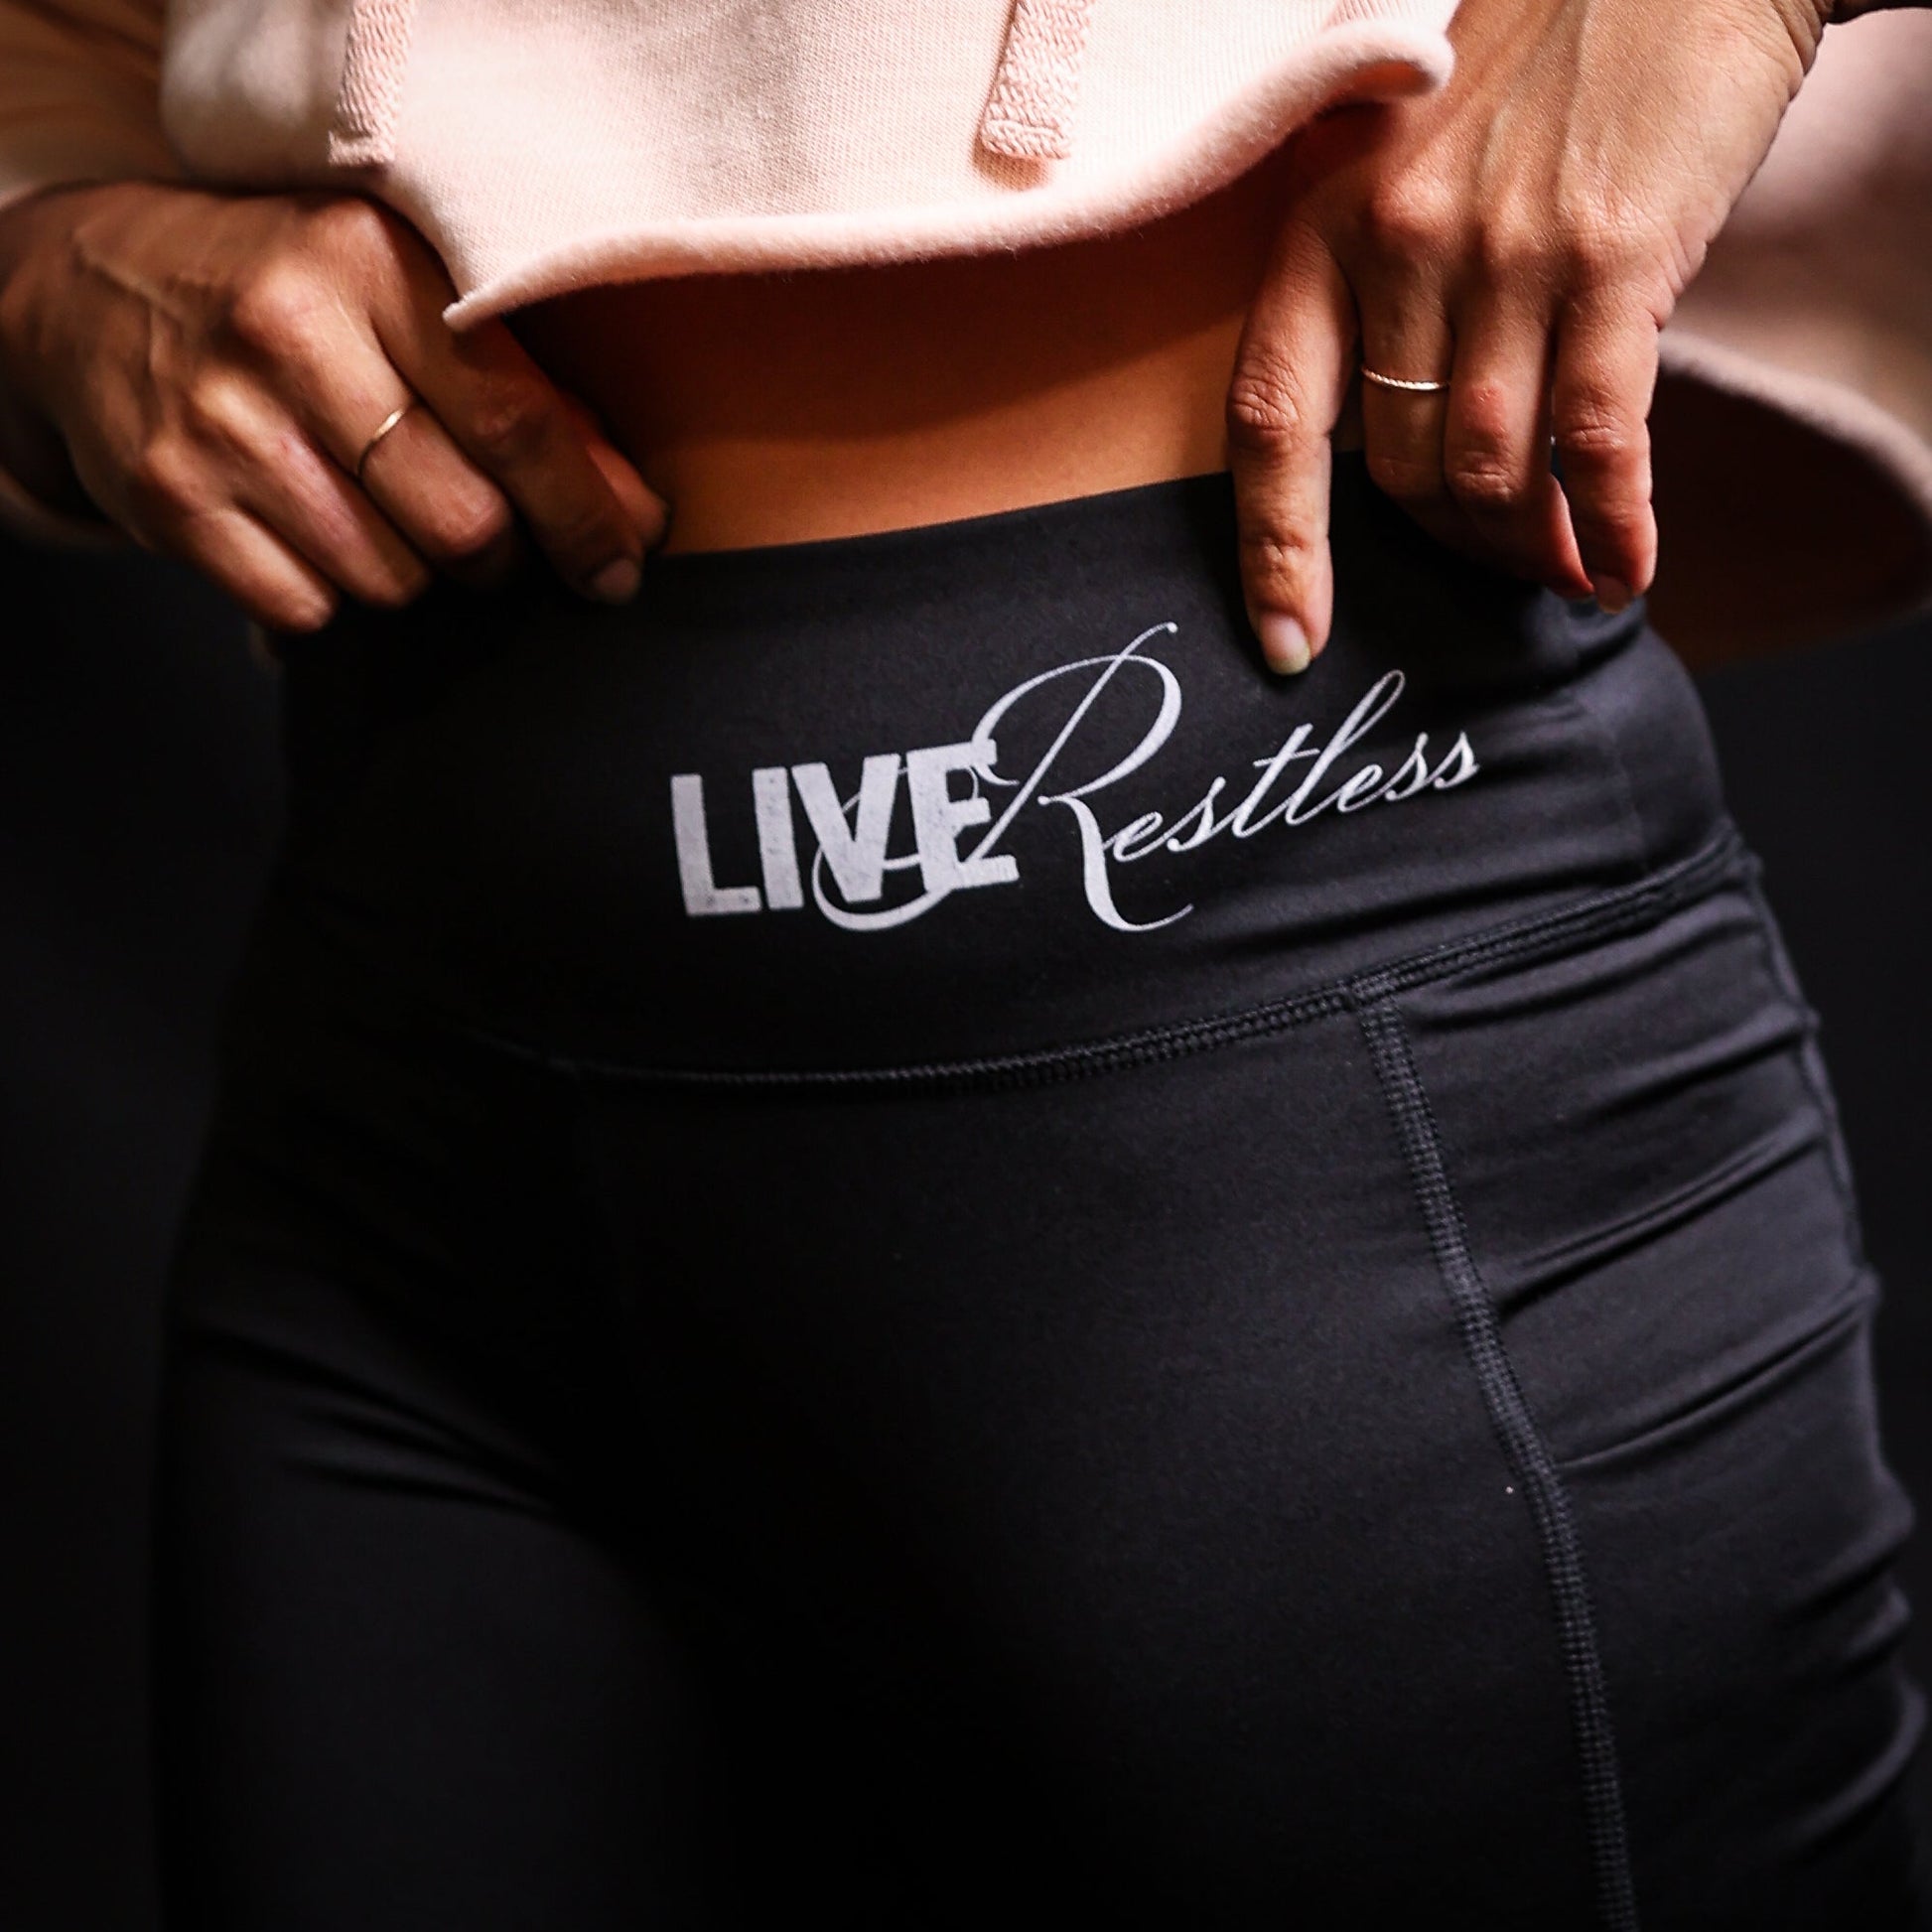 Live Restless Ladies Leggings - Black - Live Restless, LLC.